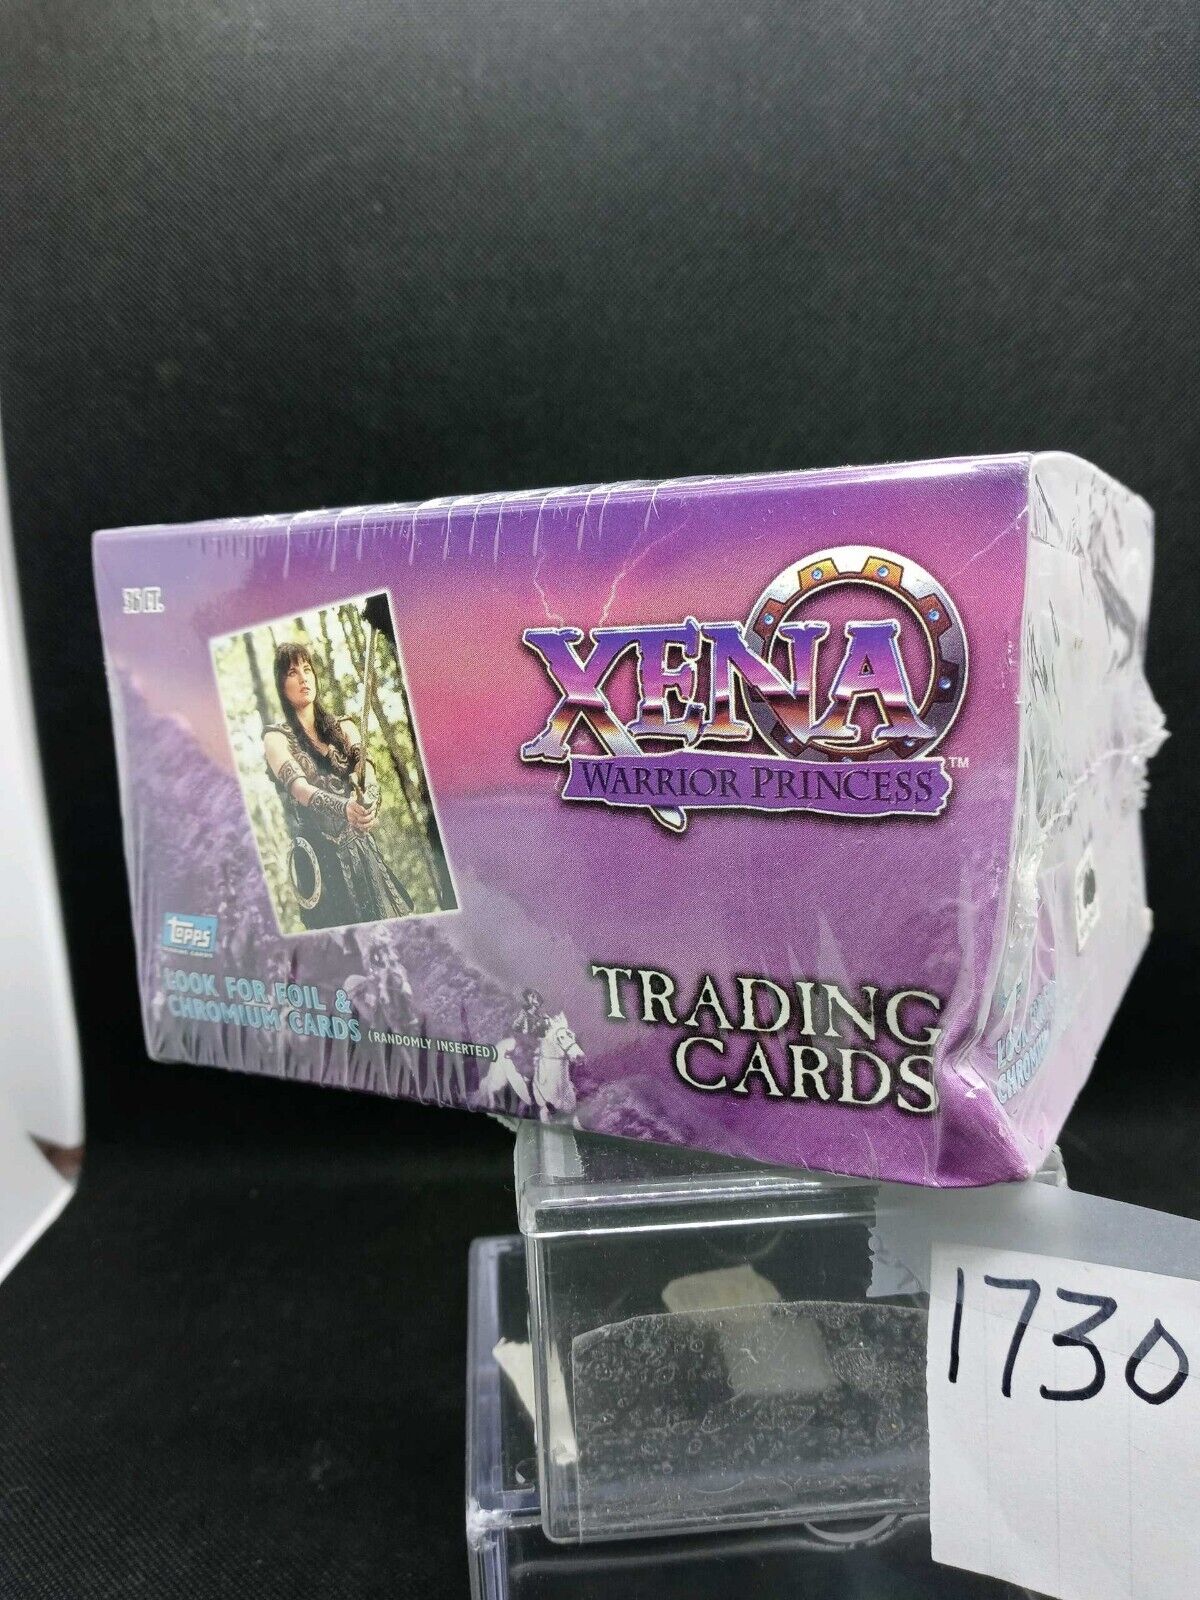 1998 TOPPS SERIES 1 XENA WARRIOR PRINCESS TRADING CARD 36 PACKS SEALED BOX RARE